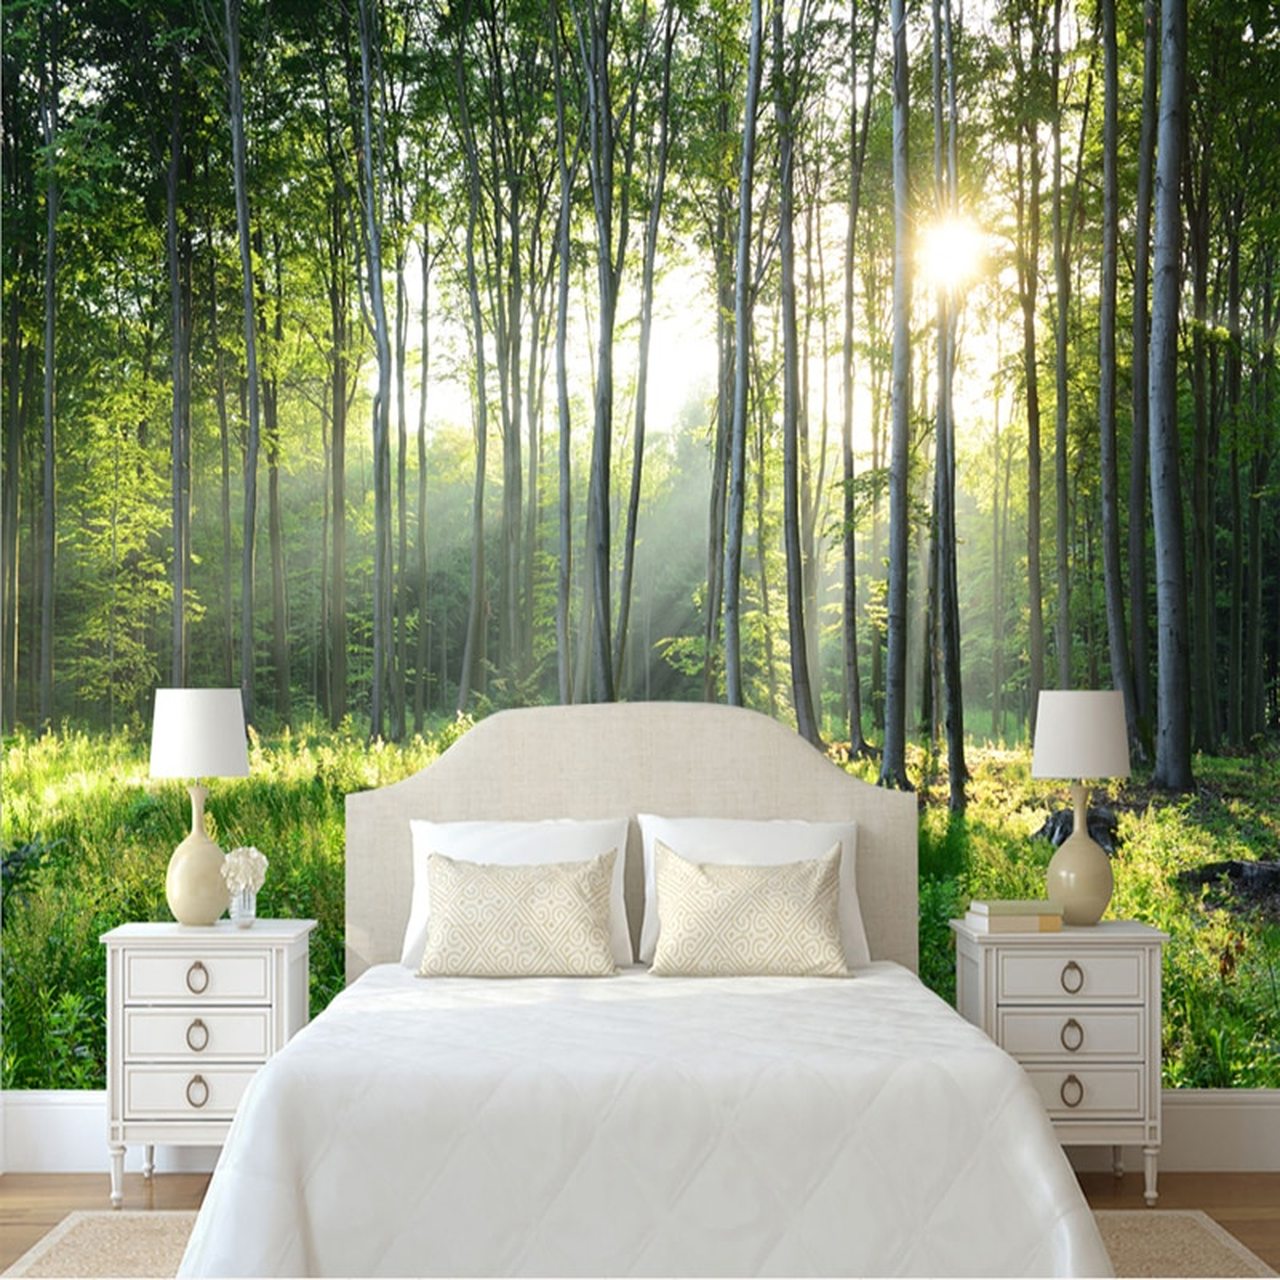 green bedroom wallpaper,nature,room,furniture,bed,tree